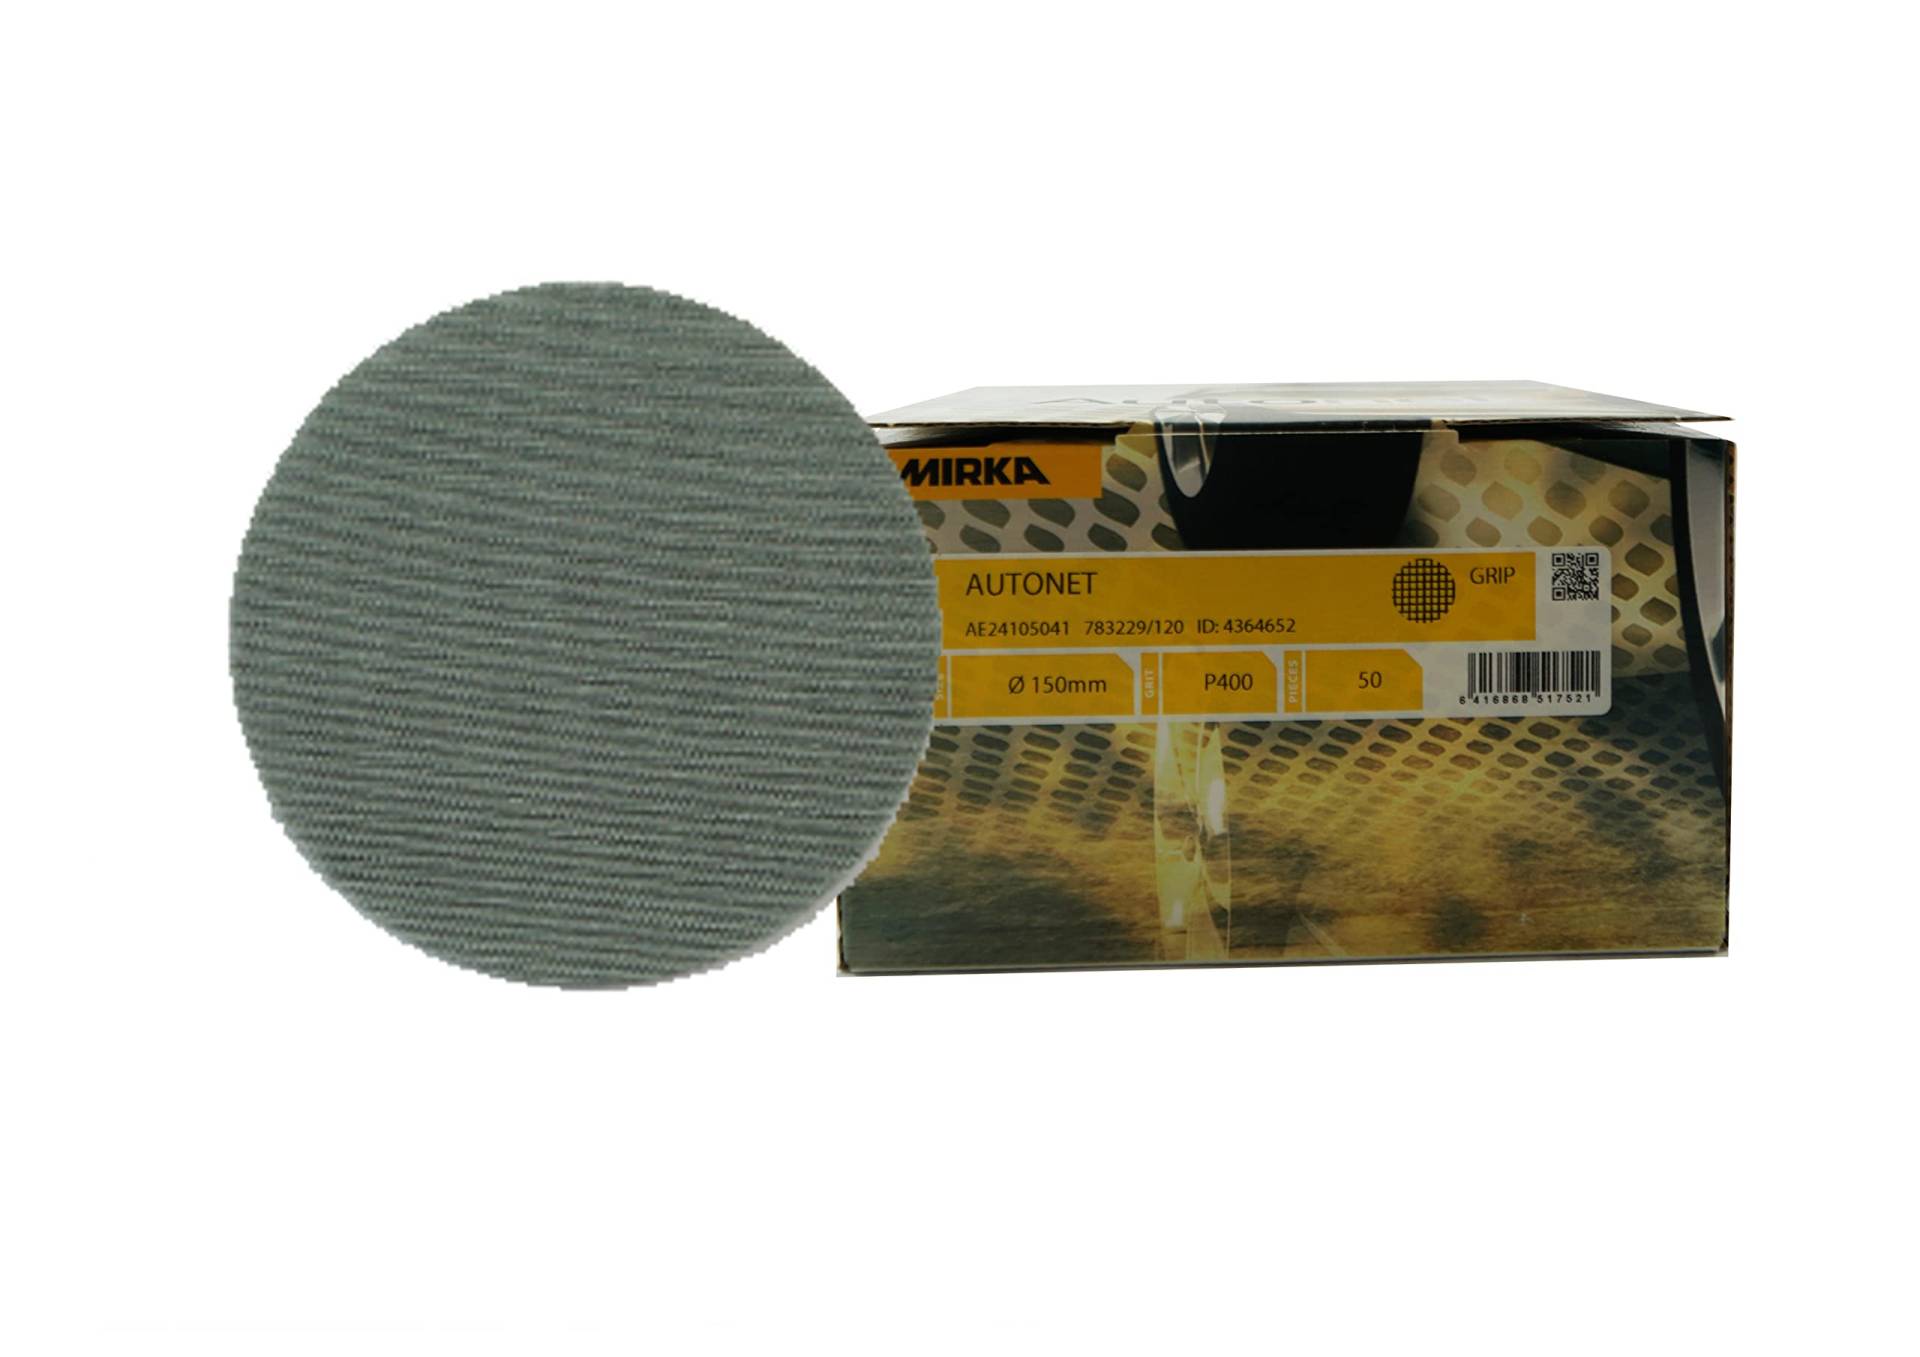 Mirka AE24105041 Autonet Sanding Disc - 150mm Grip - P400 Grit - Körnung: Aluminiumoxid auf Kunstharz über Kunstharz - PA Netz / PES Netz - Beschichtung: Geschlossen - Grau - Packung enthält 50 Stück von MIRKA